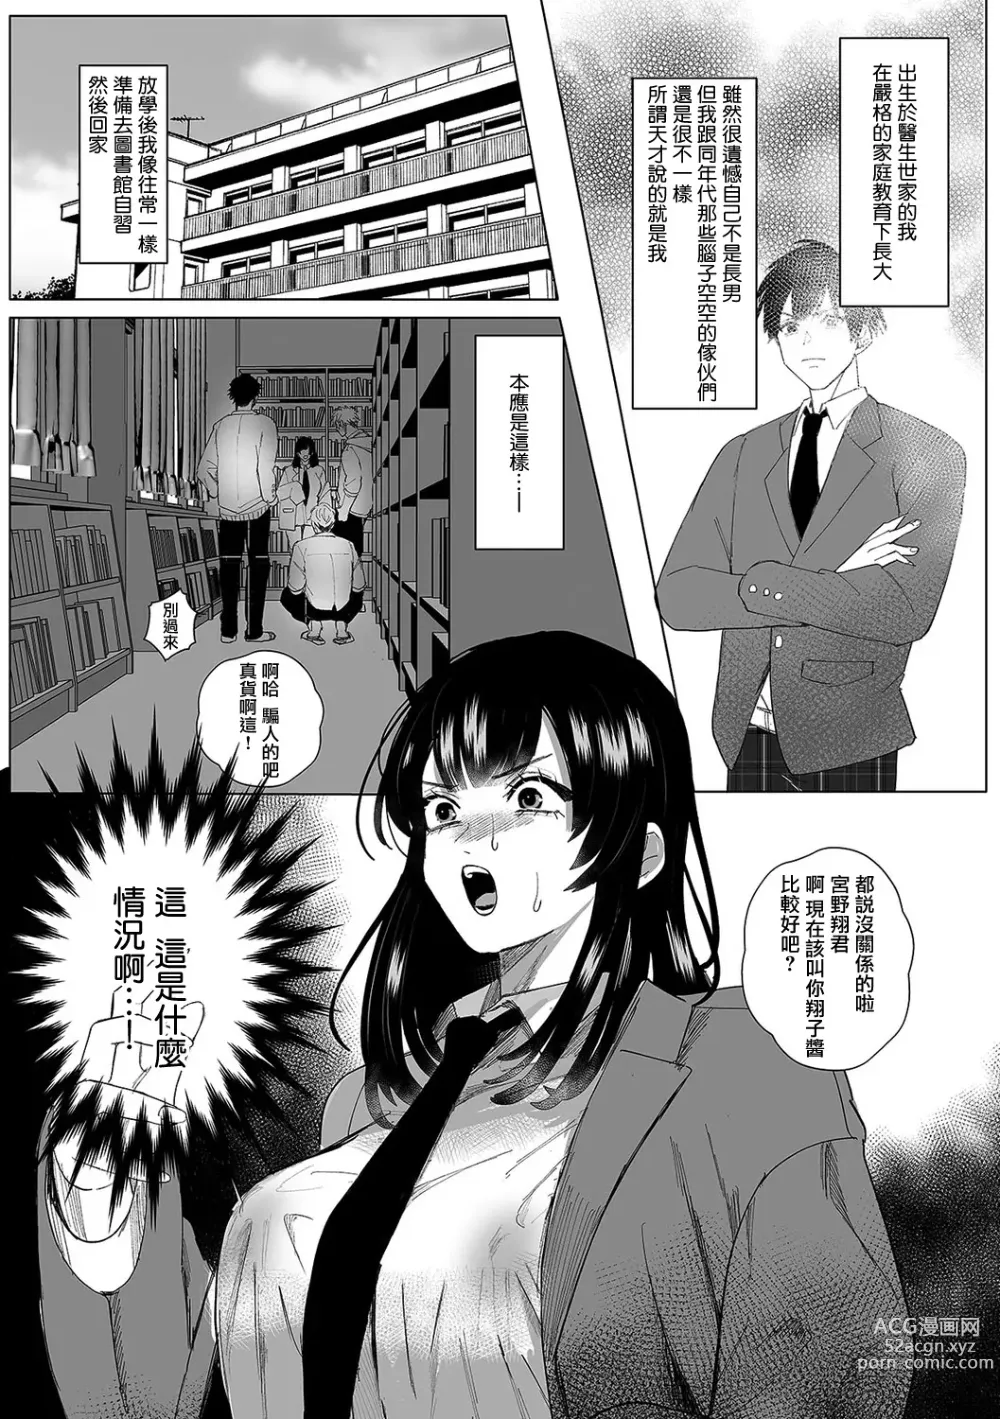 Page 1 of manga 明明只是像往常一样去图书馆自习…竟然被DQN团体逆袭轮奸强制雌堕！！